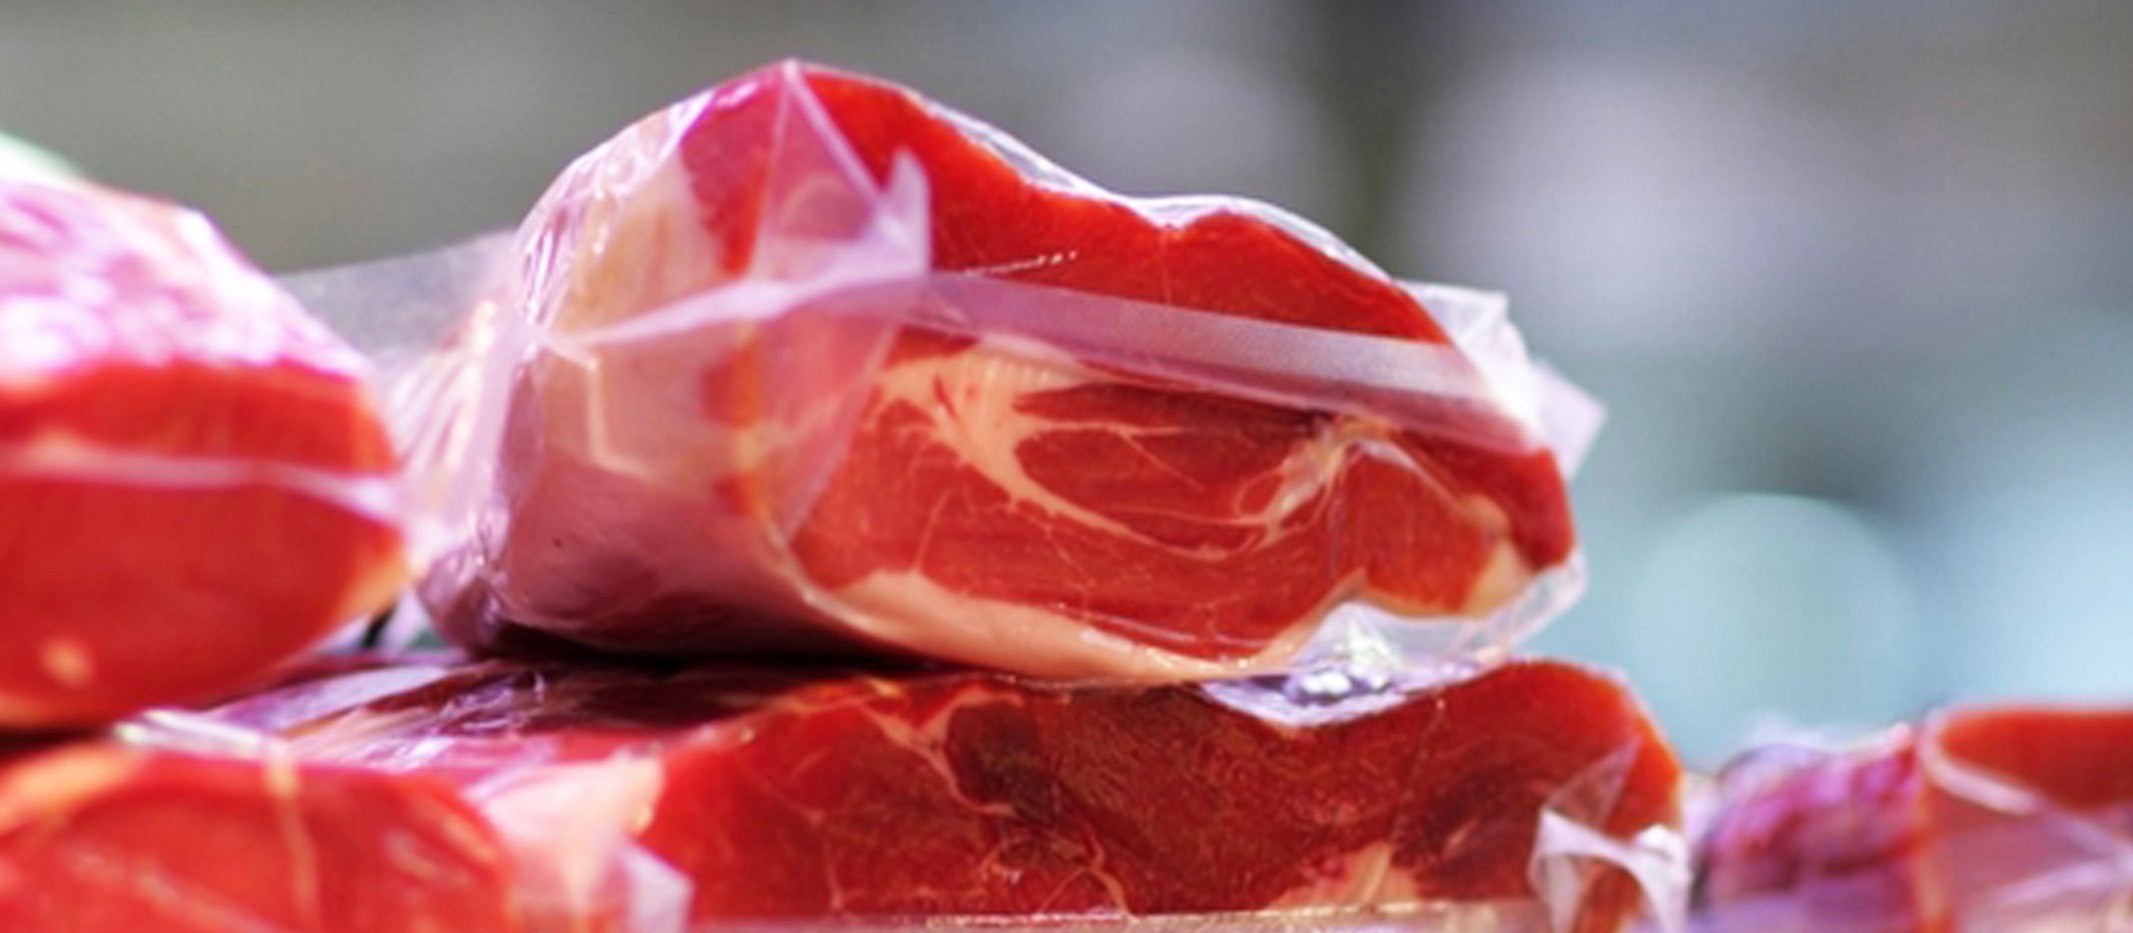 Fraca demanda pressiona valores da carne bovina